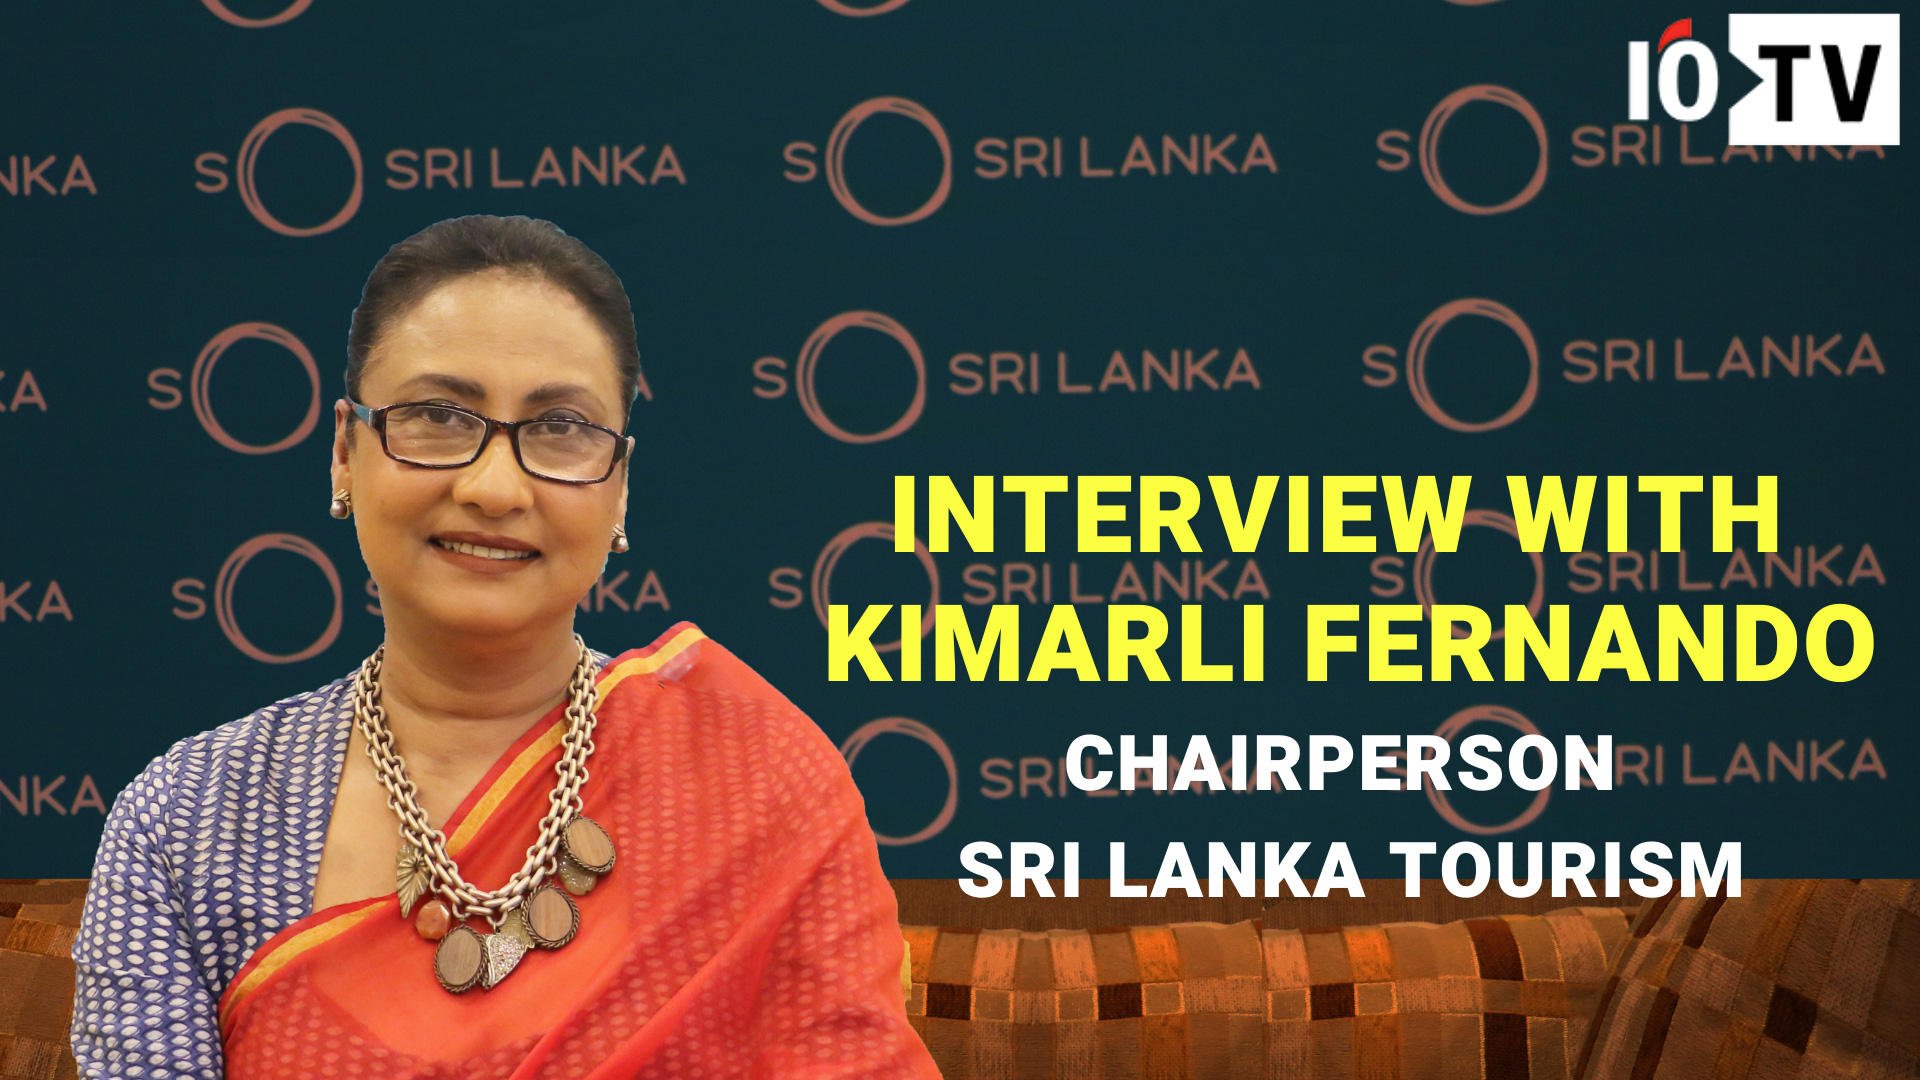 Interview with Kimarli Fernando, Chairperson, Sri Lanka Tourism